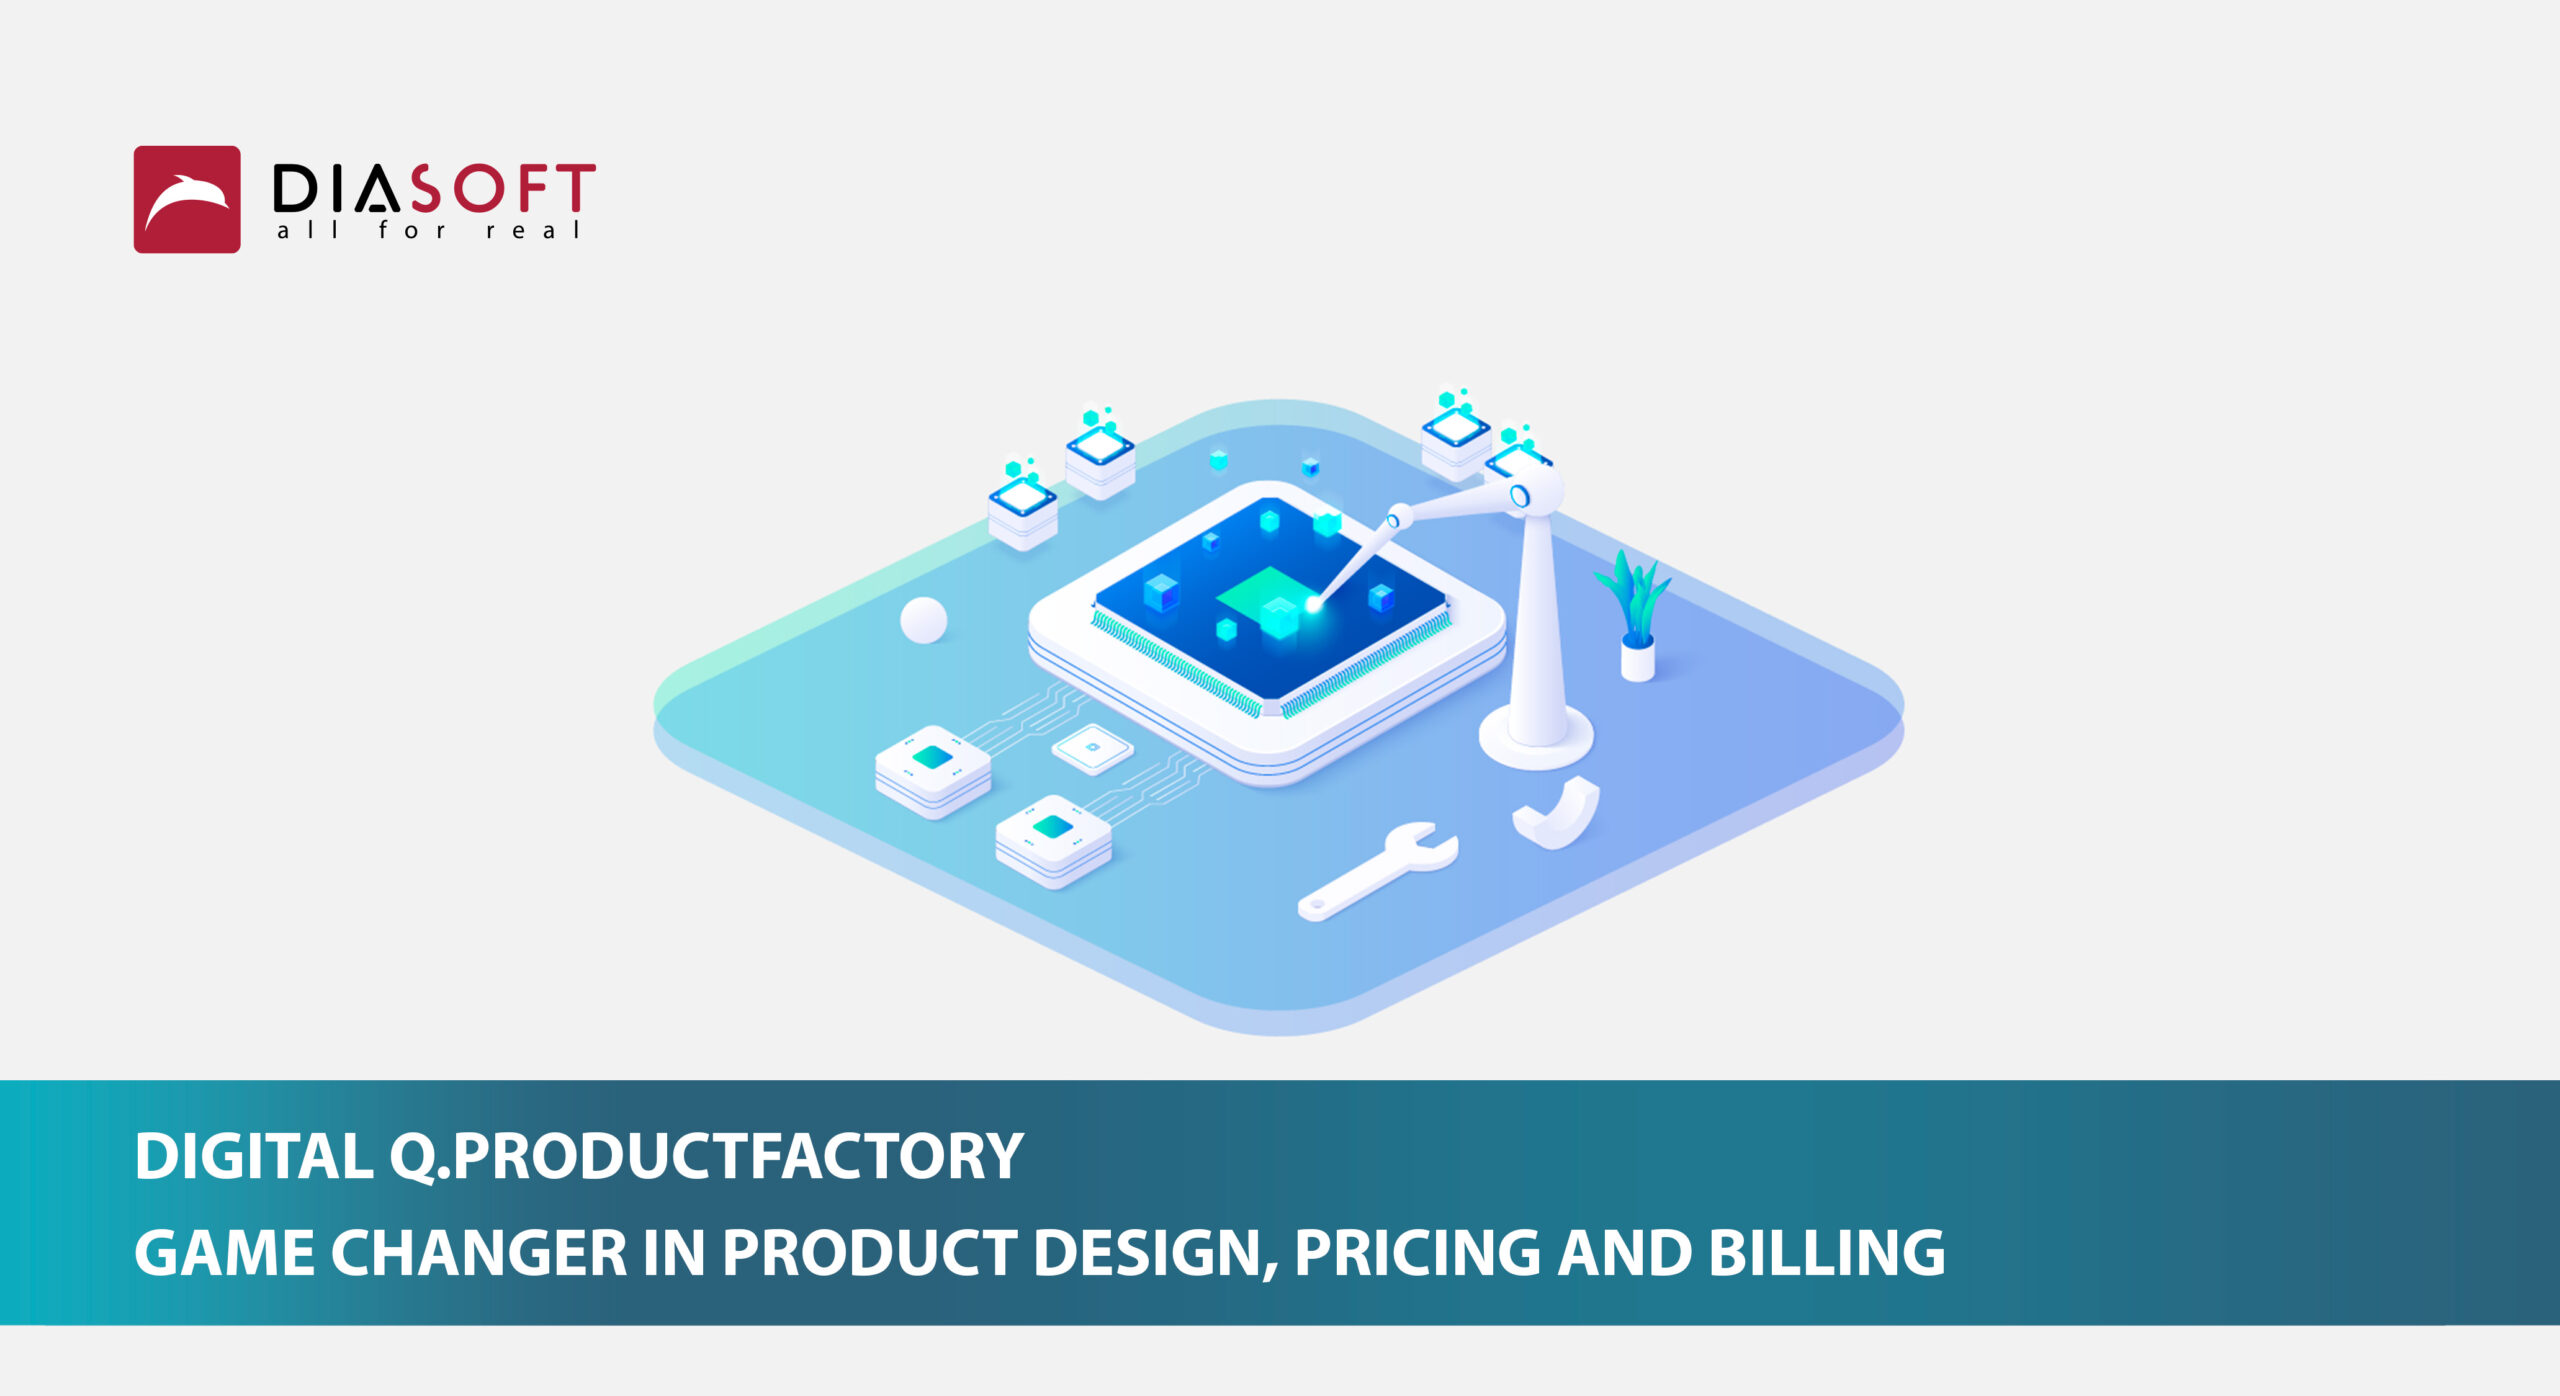 Digital Q.ProductFactory Workshop: Platform Features and Product Design Demo